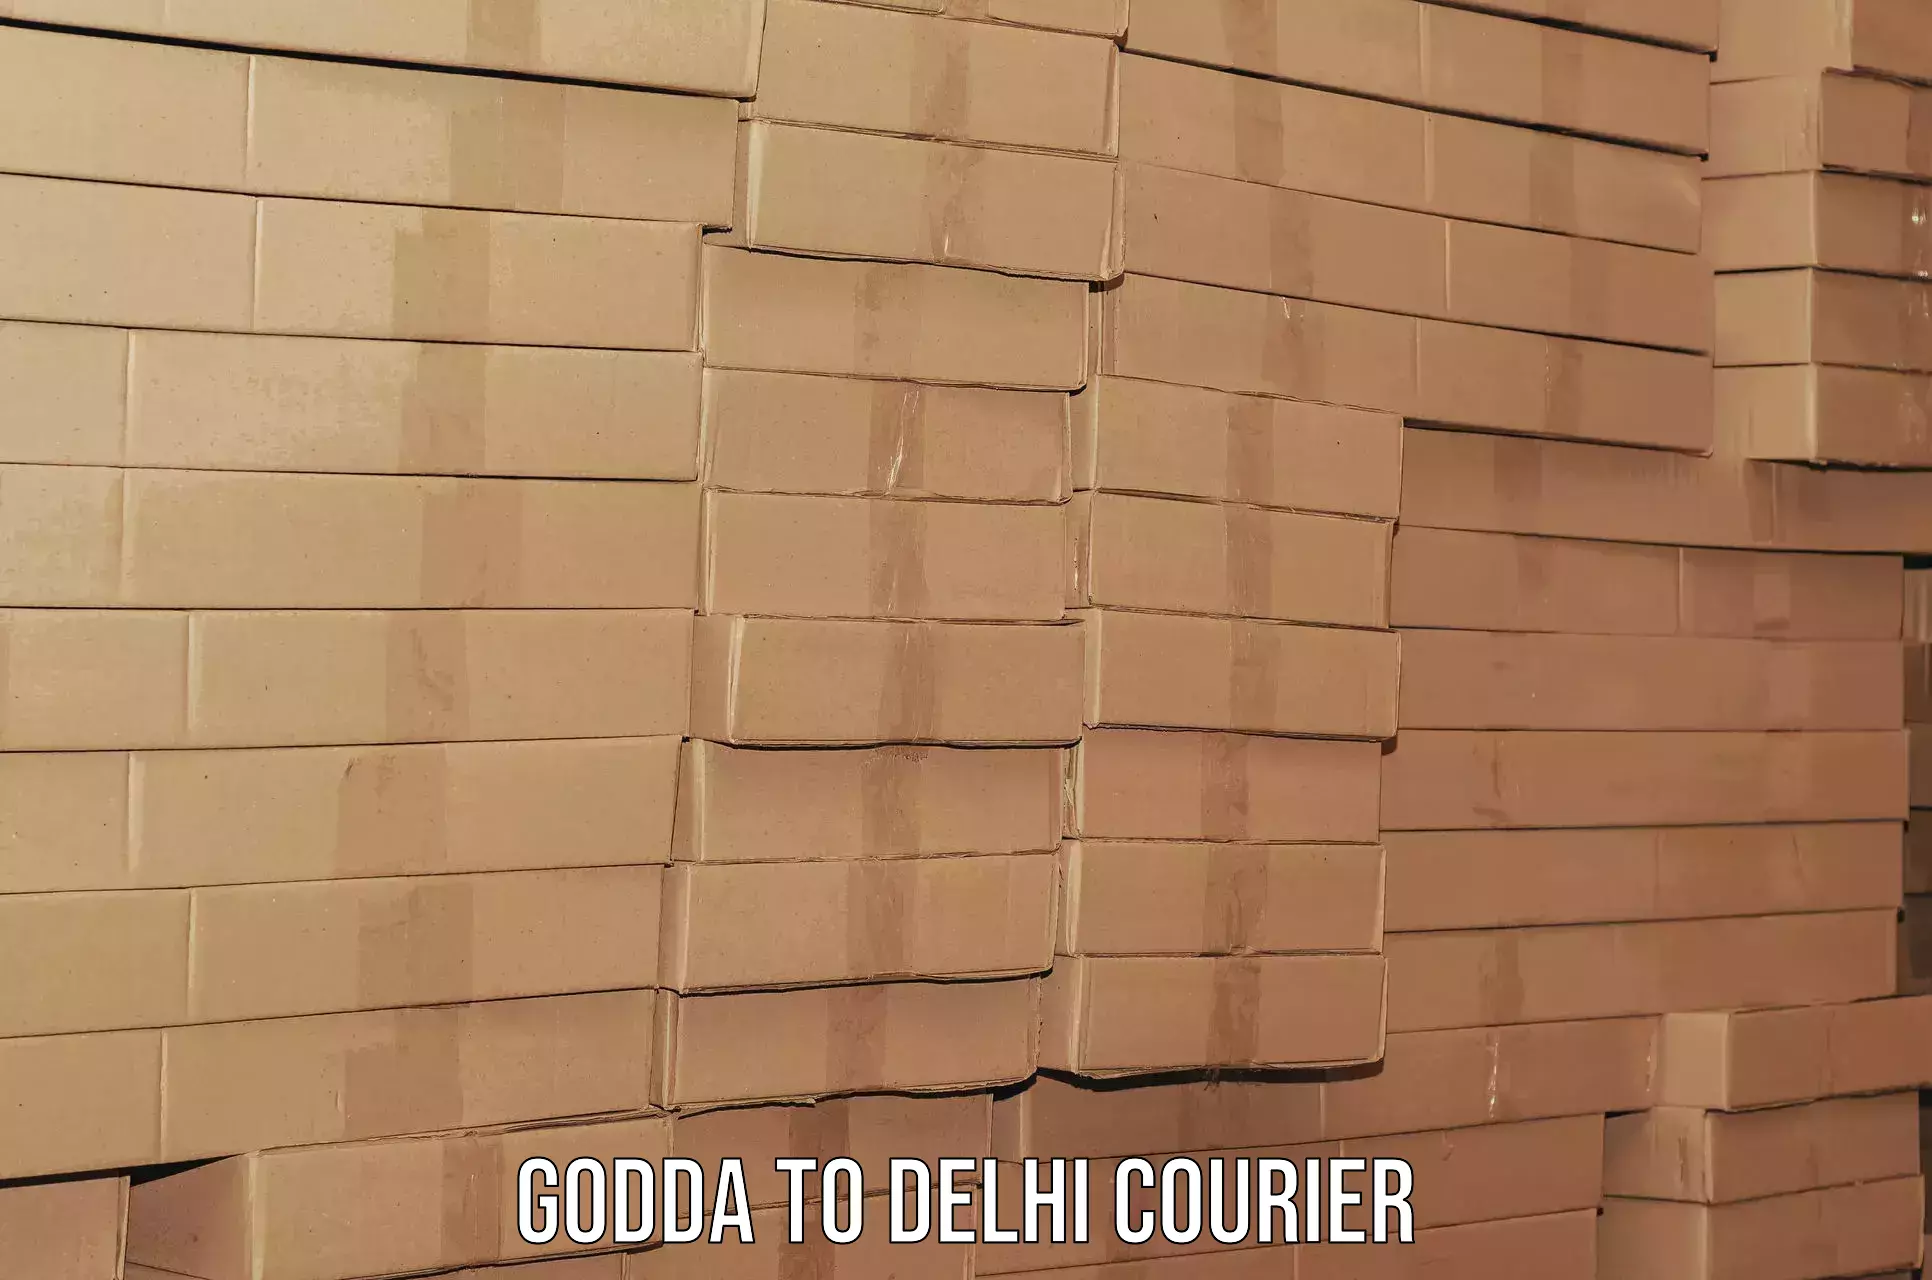 Furniture delivery service Godda to NCR